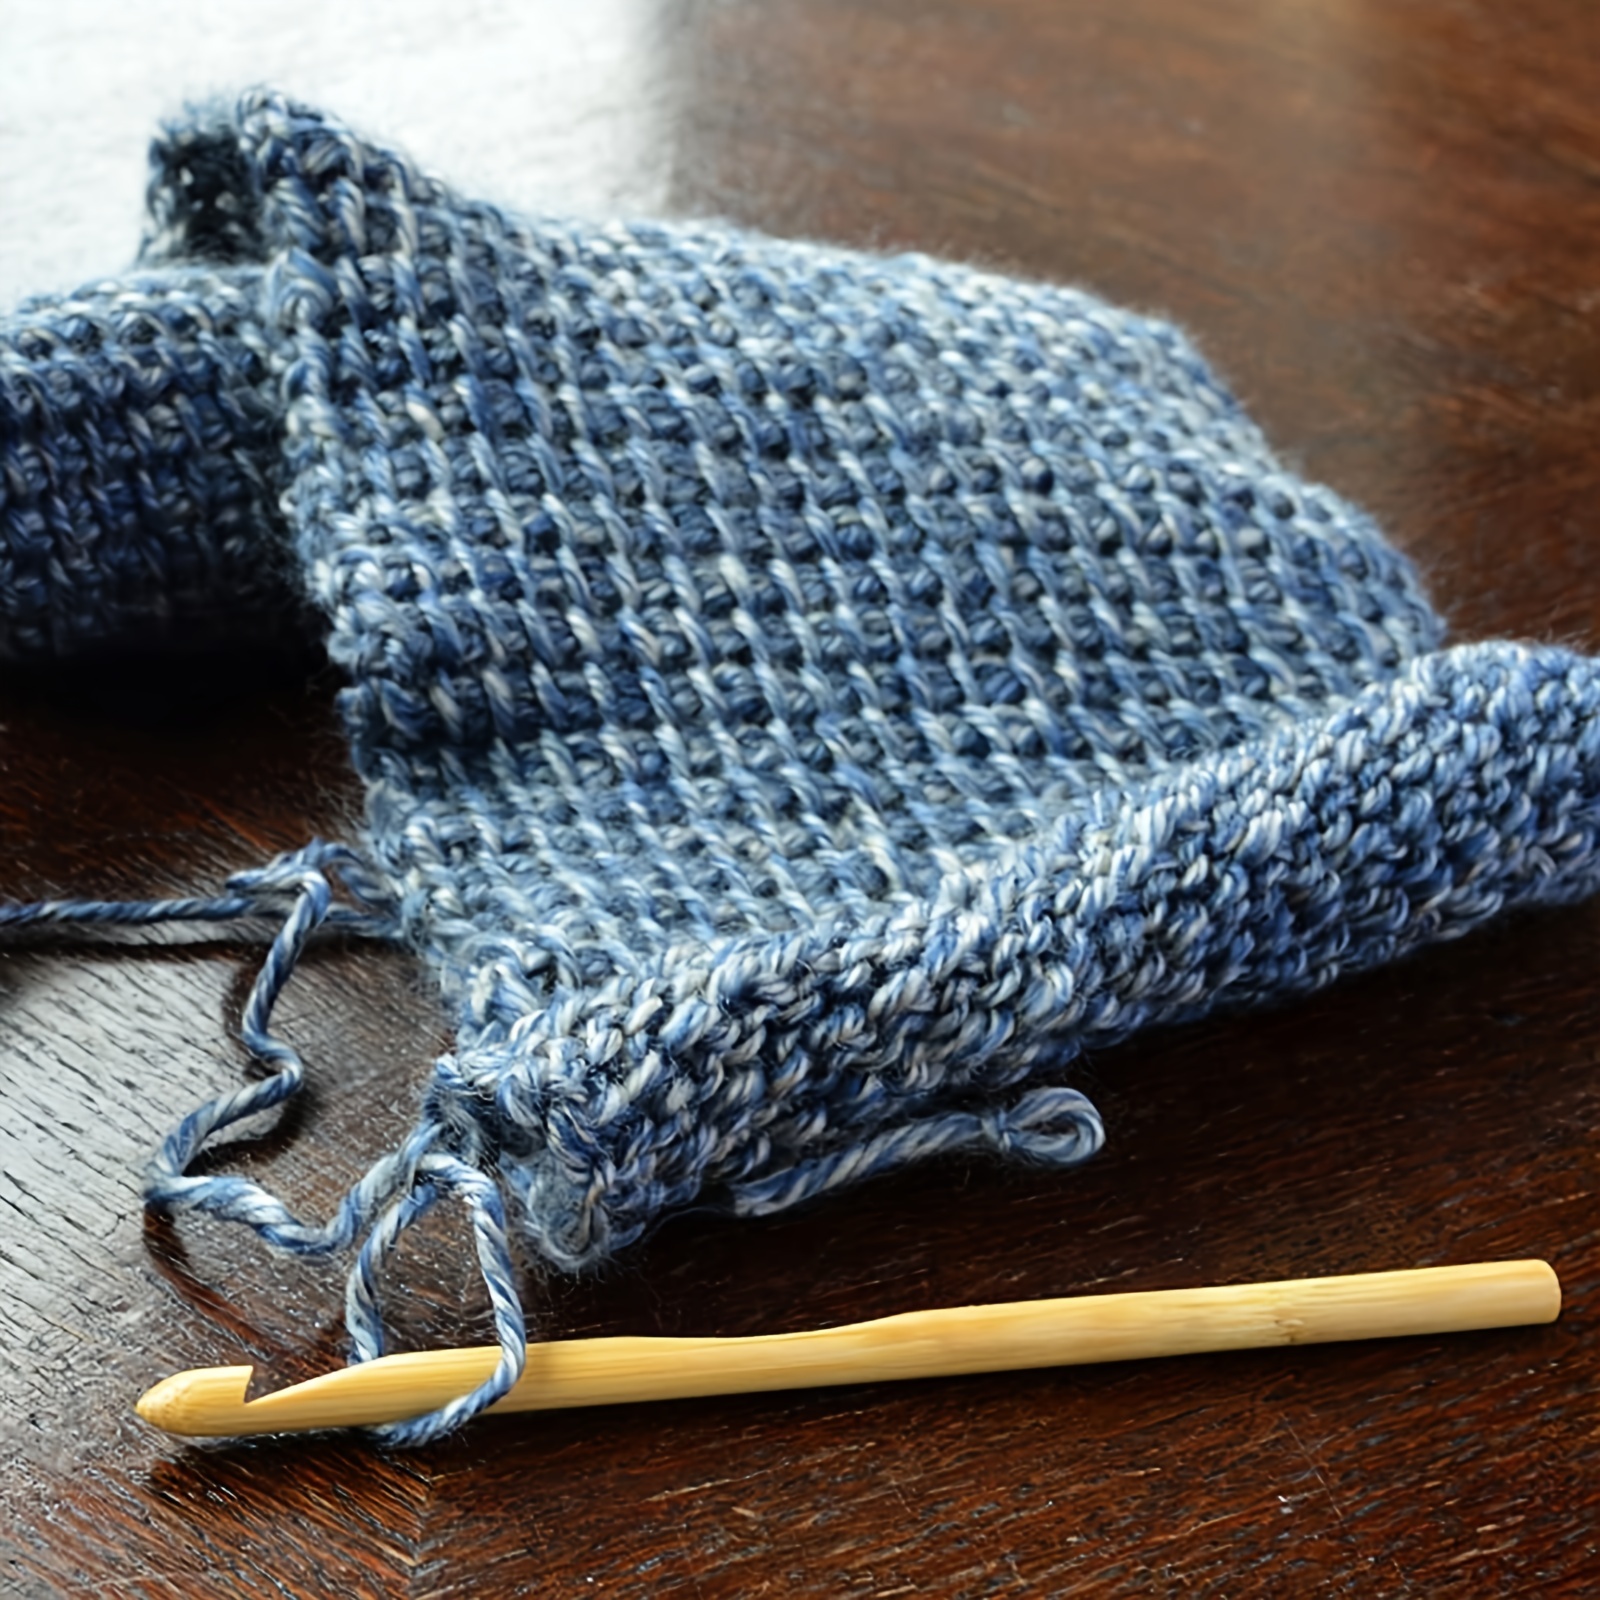 20 Sizes Bamboo Crochet Hooks Knitting Needles Craft Sewing Tools Knitting  Yarn With Purple Case at Rs 290/set, Mumbai